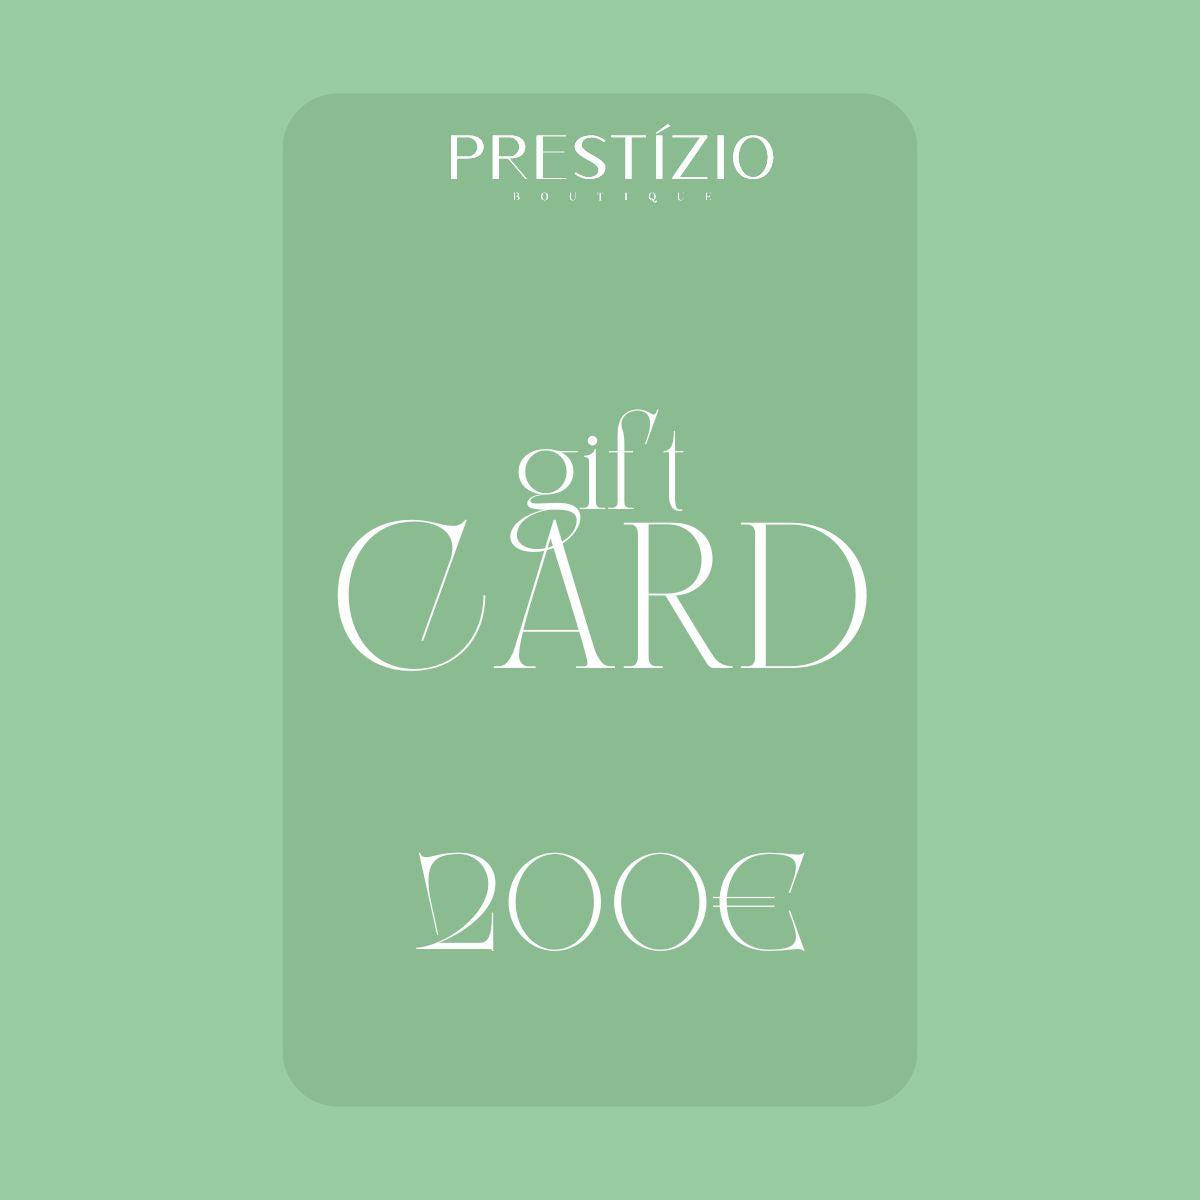 200€ GIFT CARD